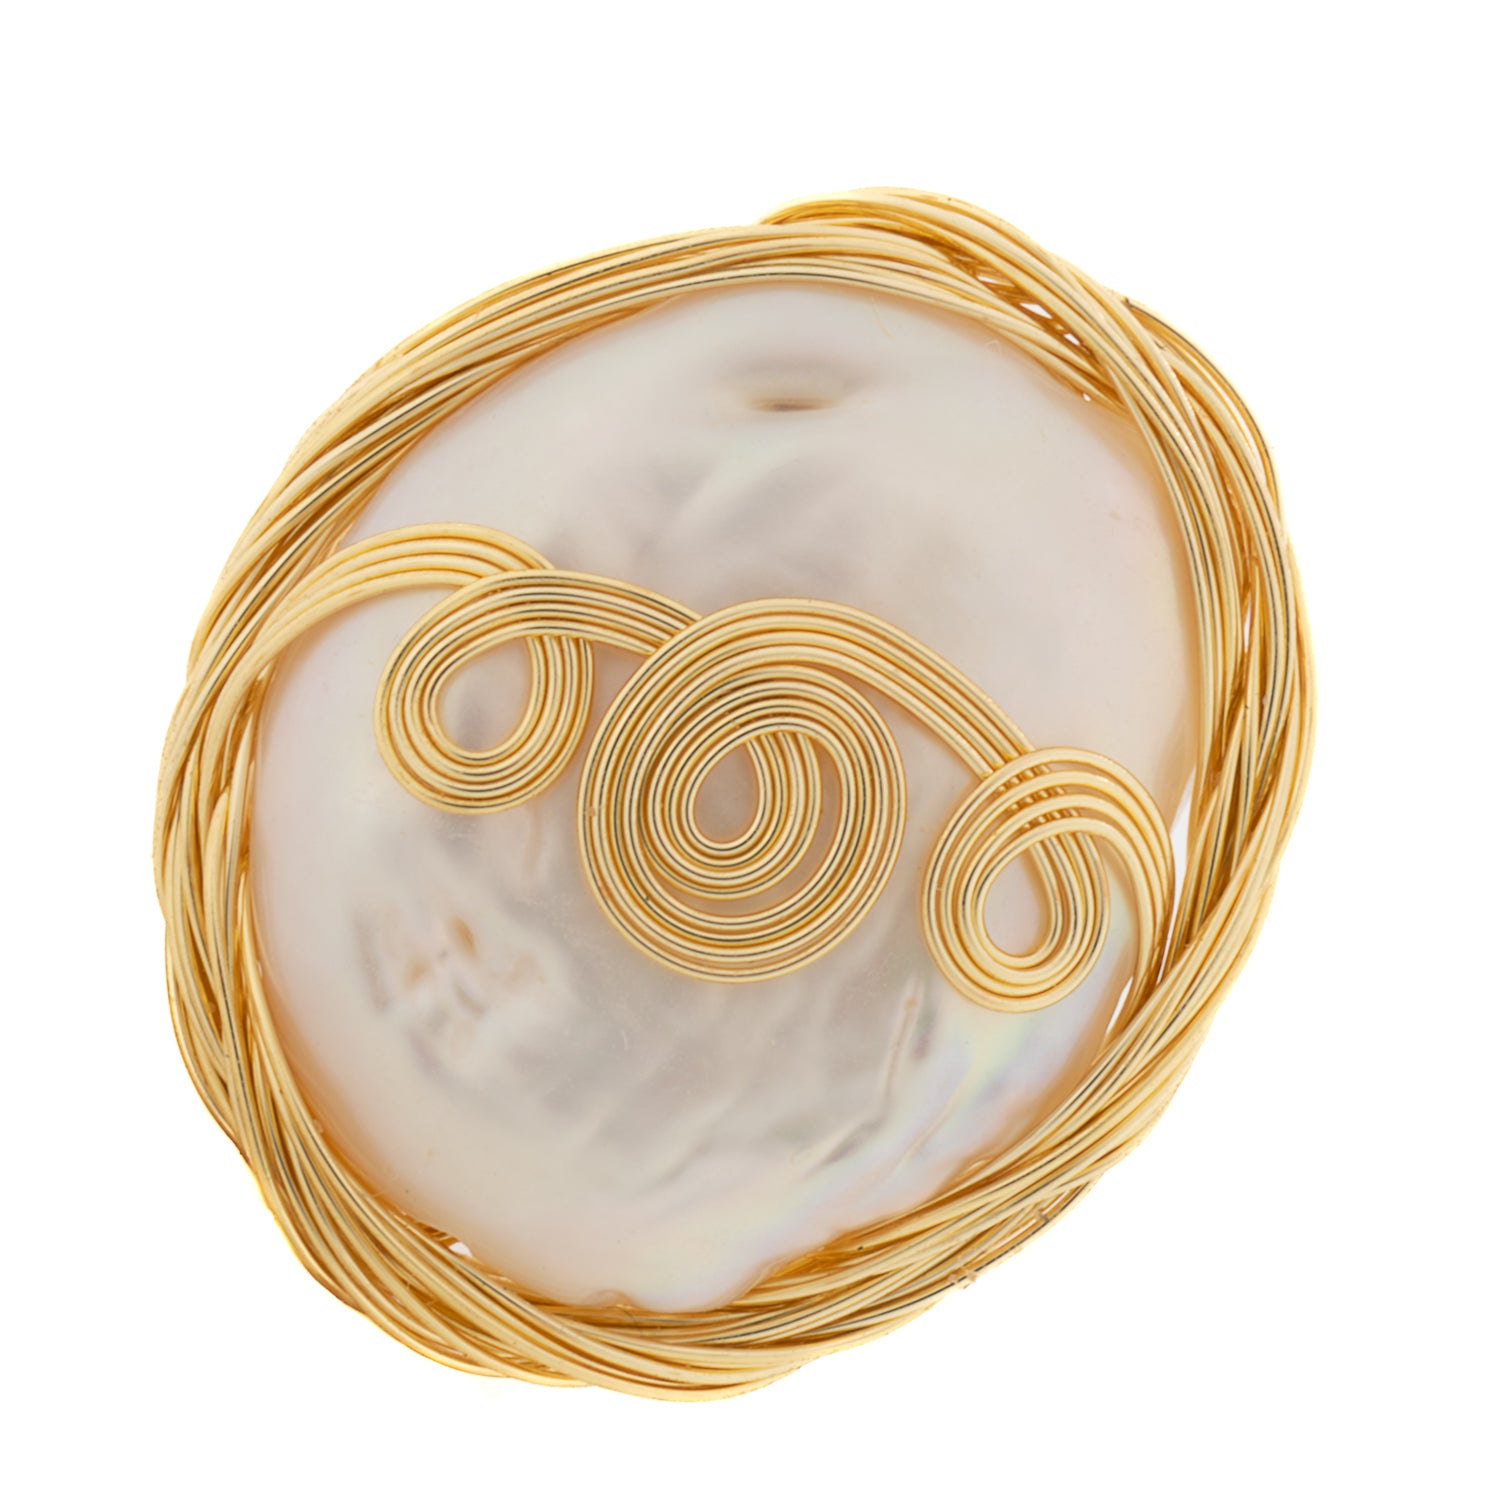 Lustrous Pearl & Intricate Spiral Motif - Cleopatra Spiral Ring